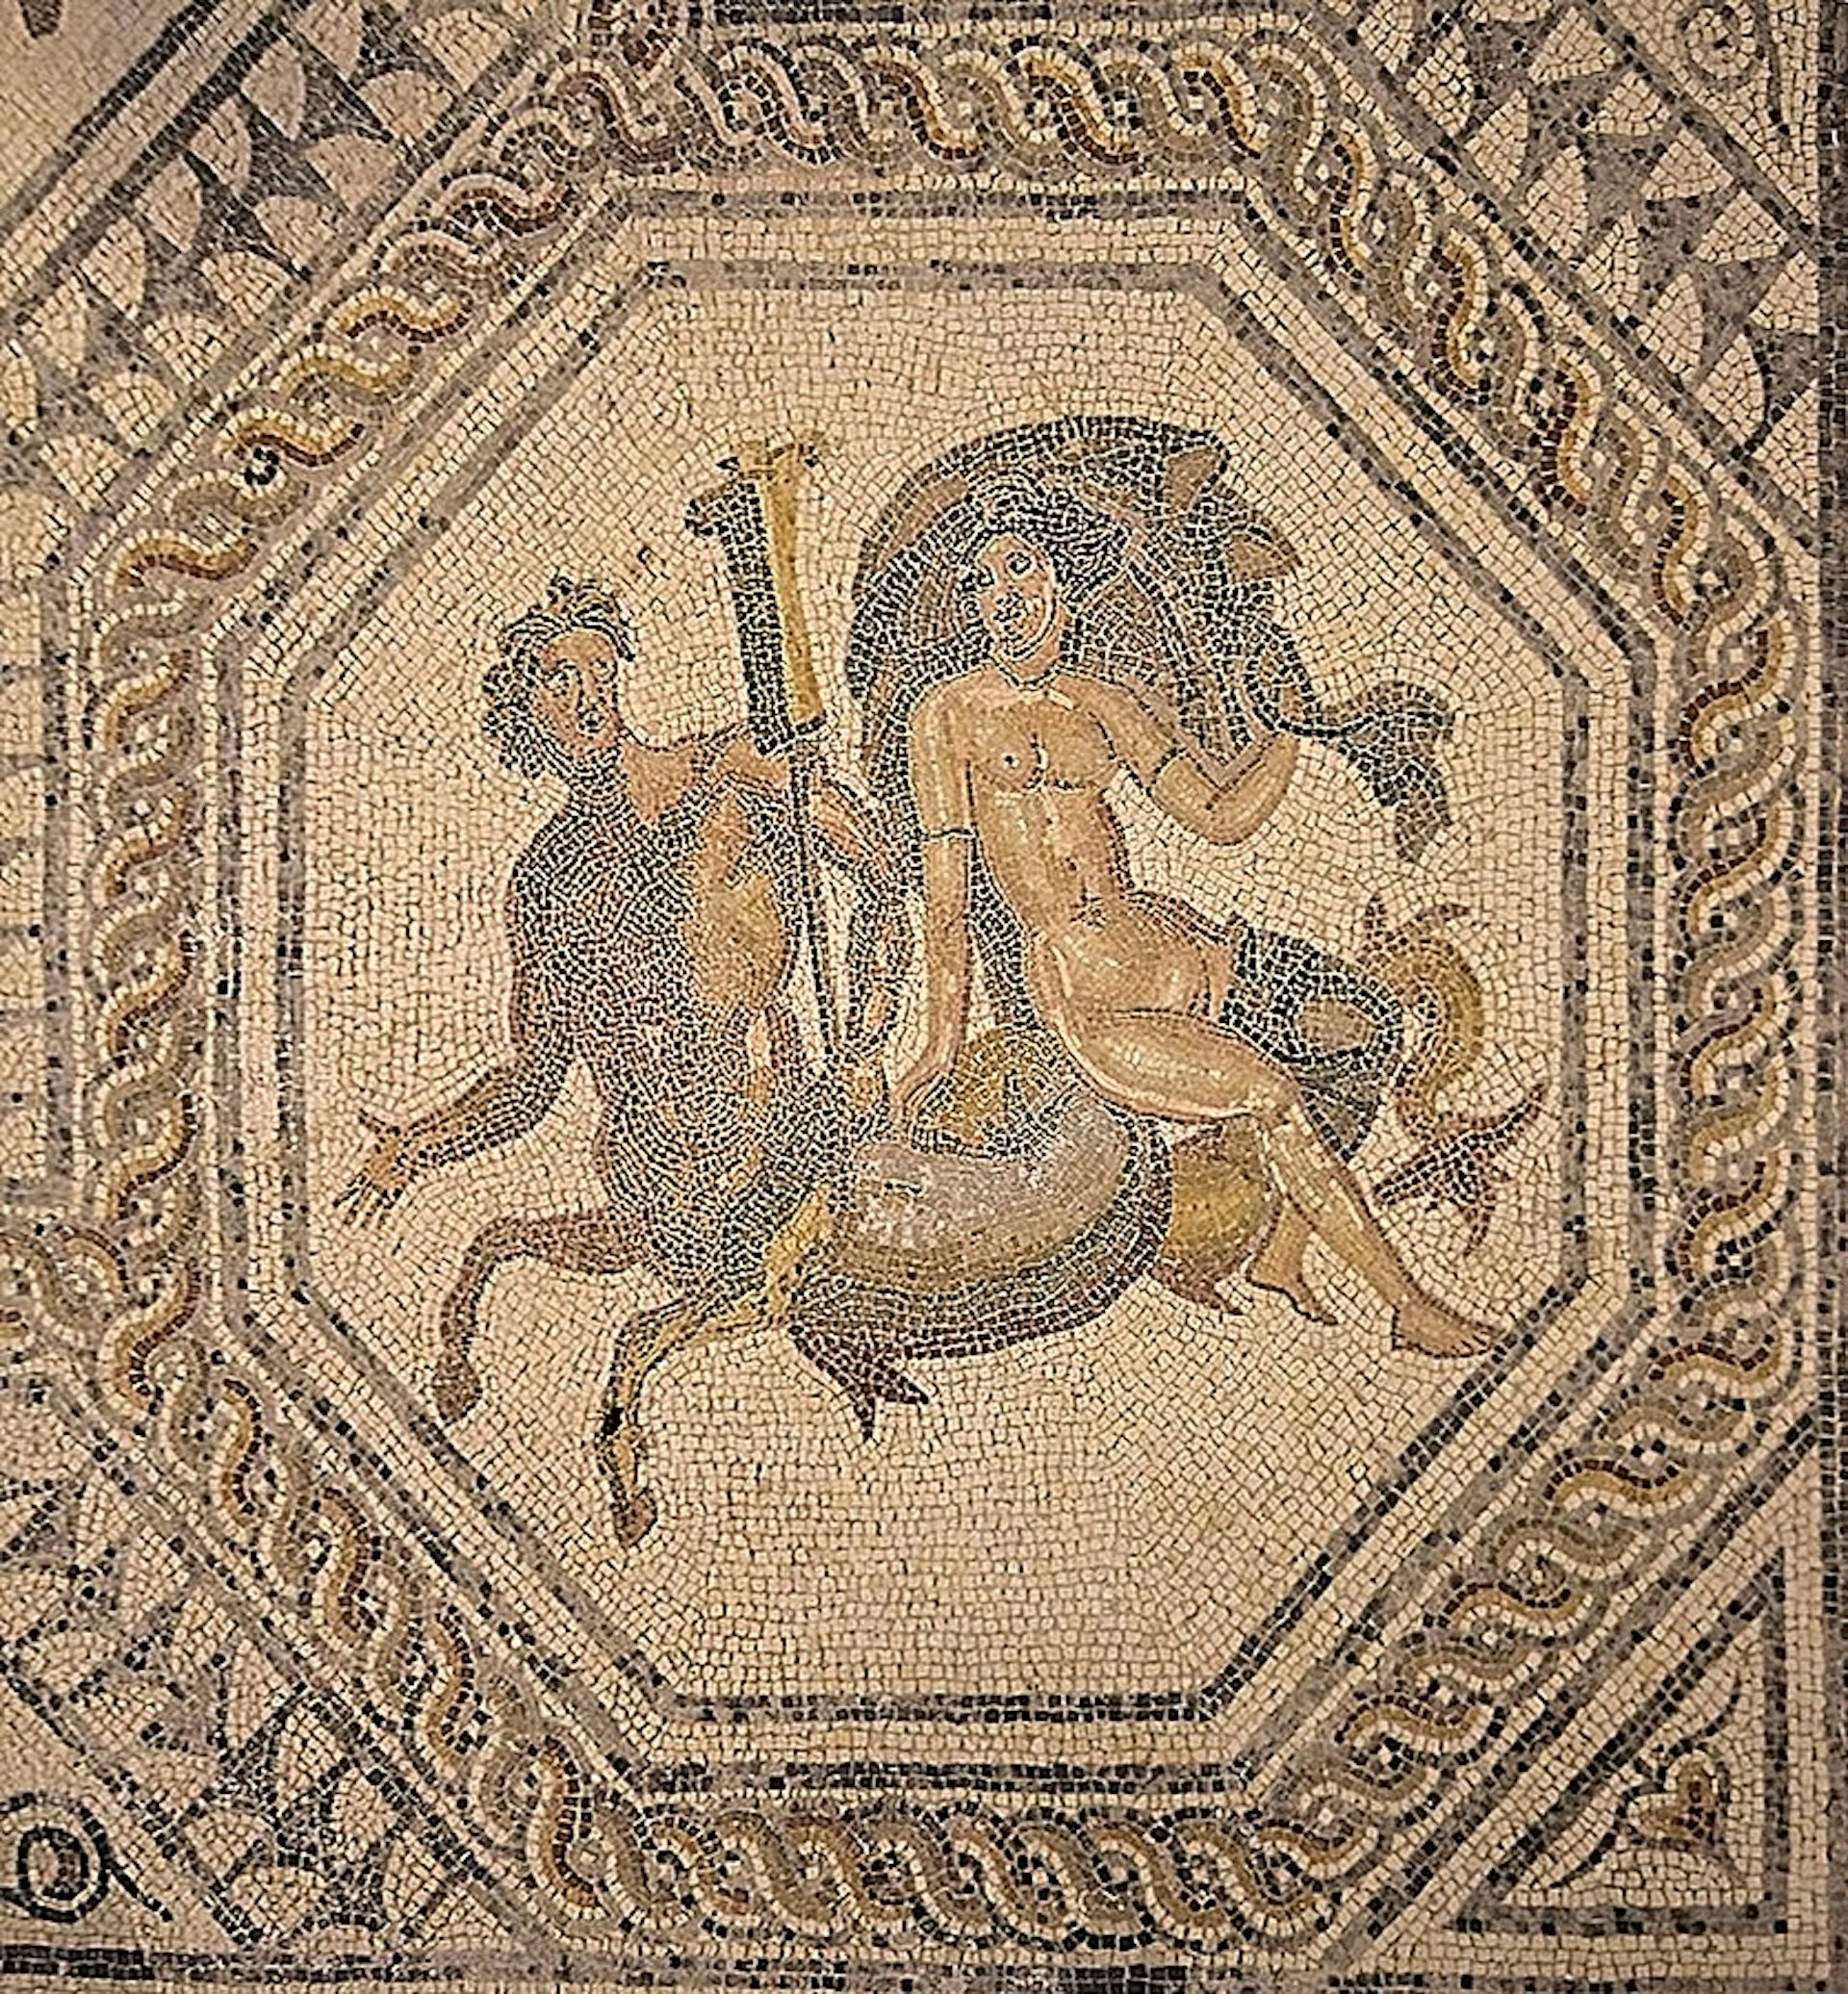 Mosaic showing a Nereid riding a triton